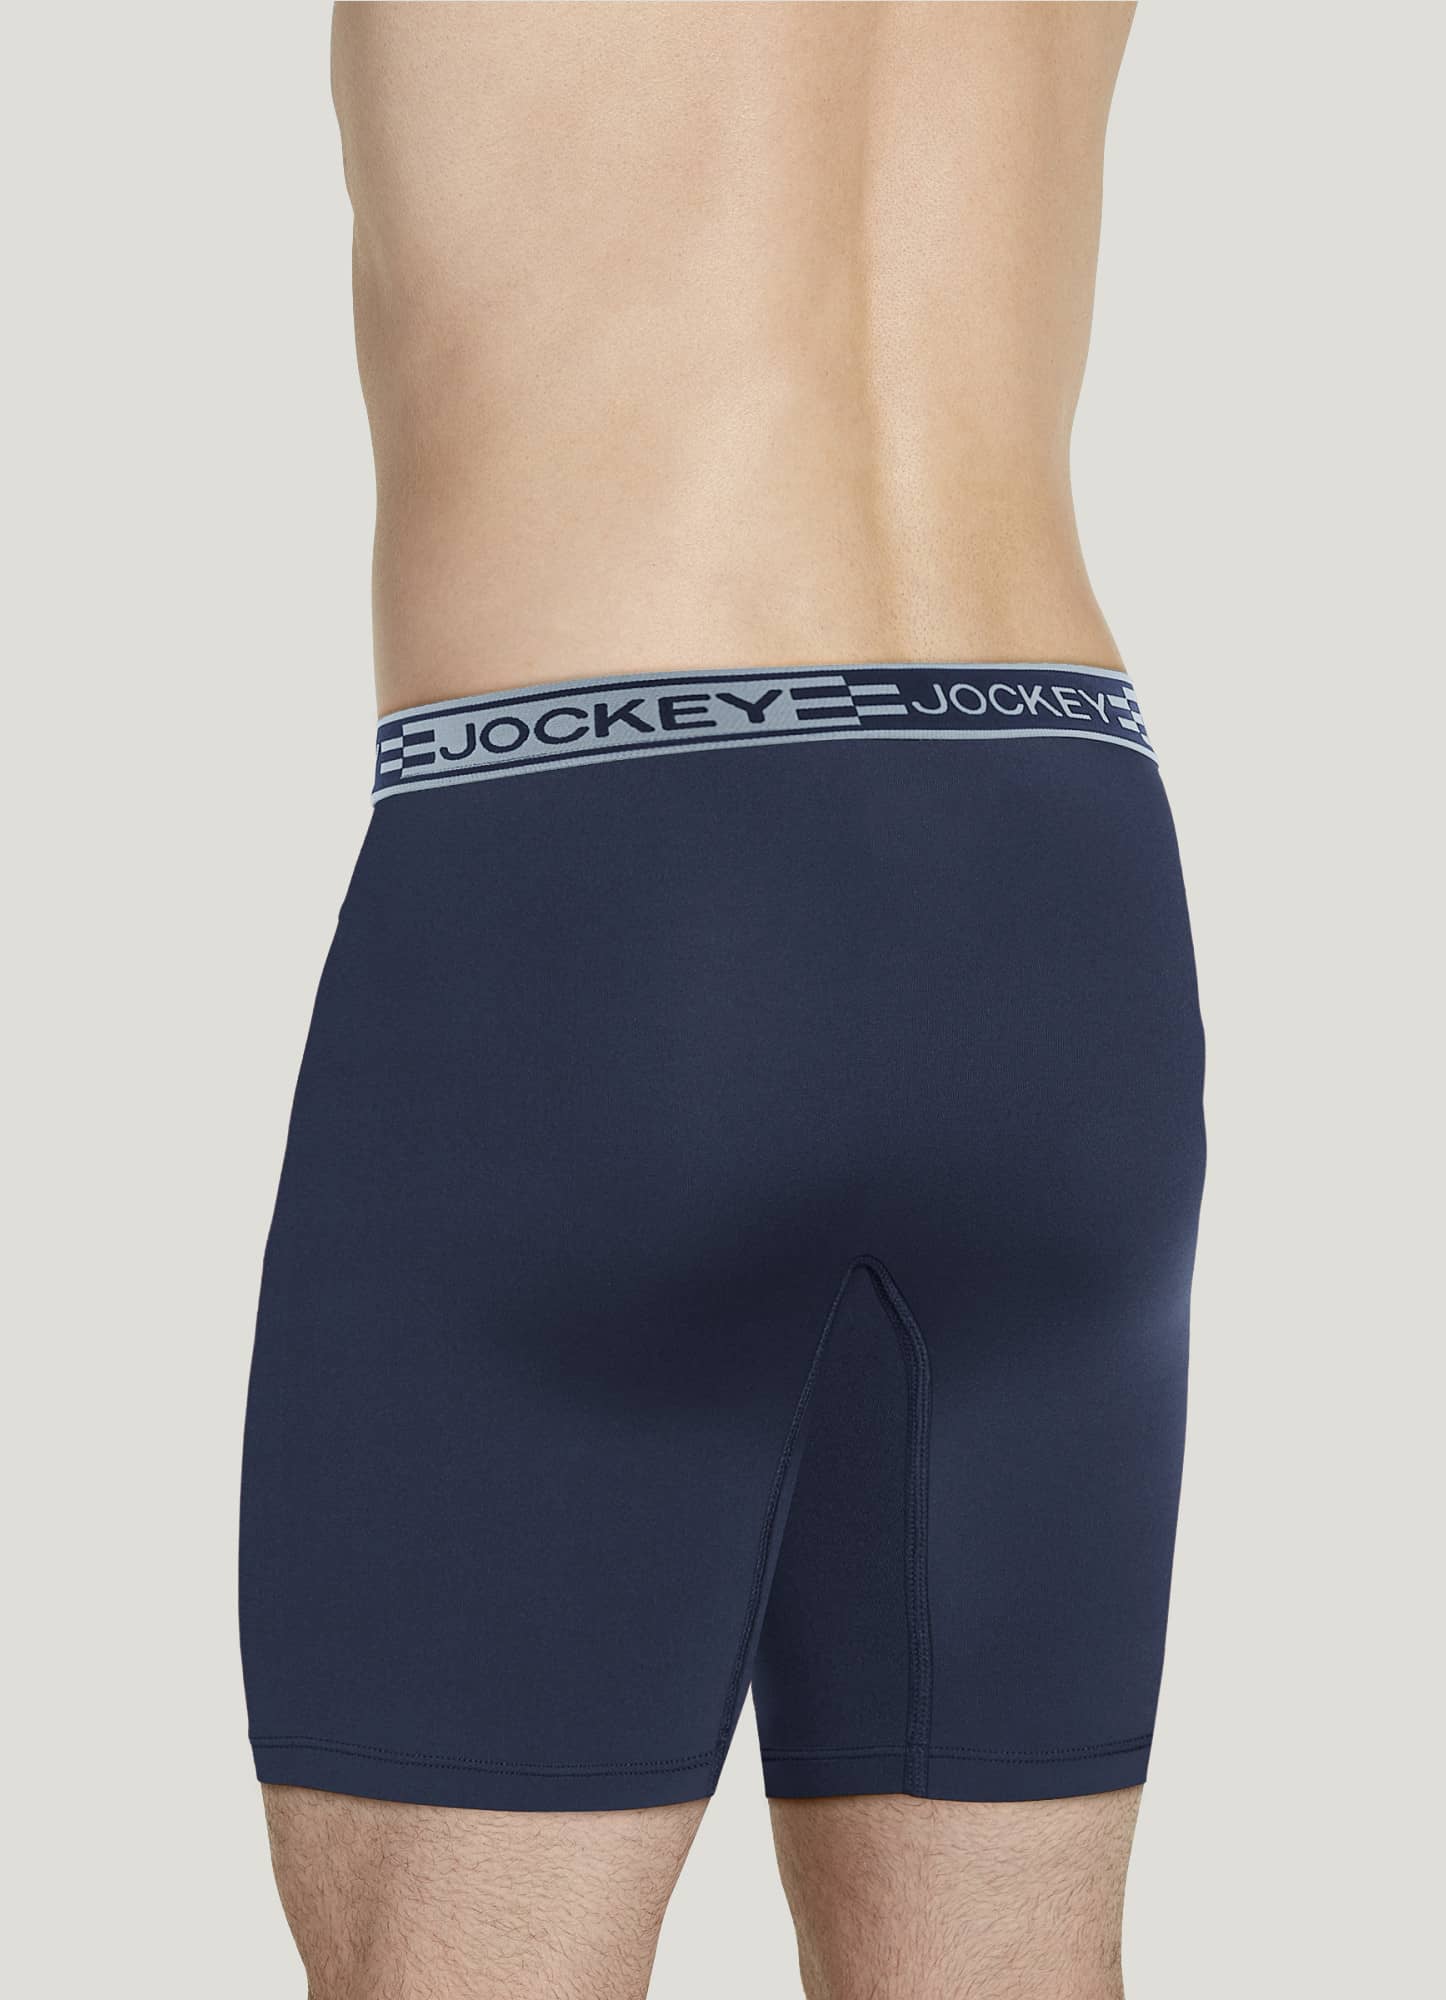 Jockey Sport – Underwear News Briefs